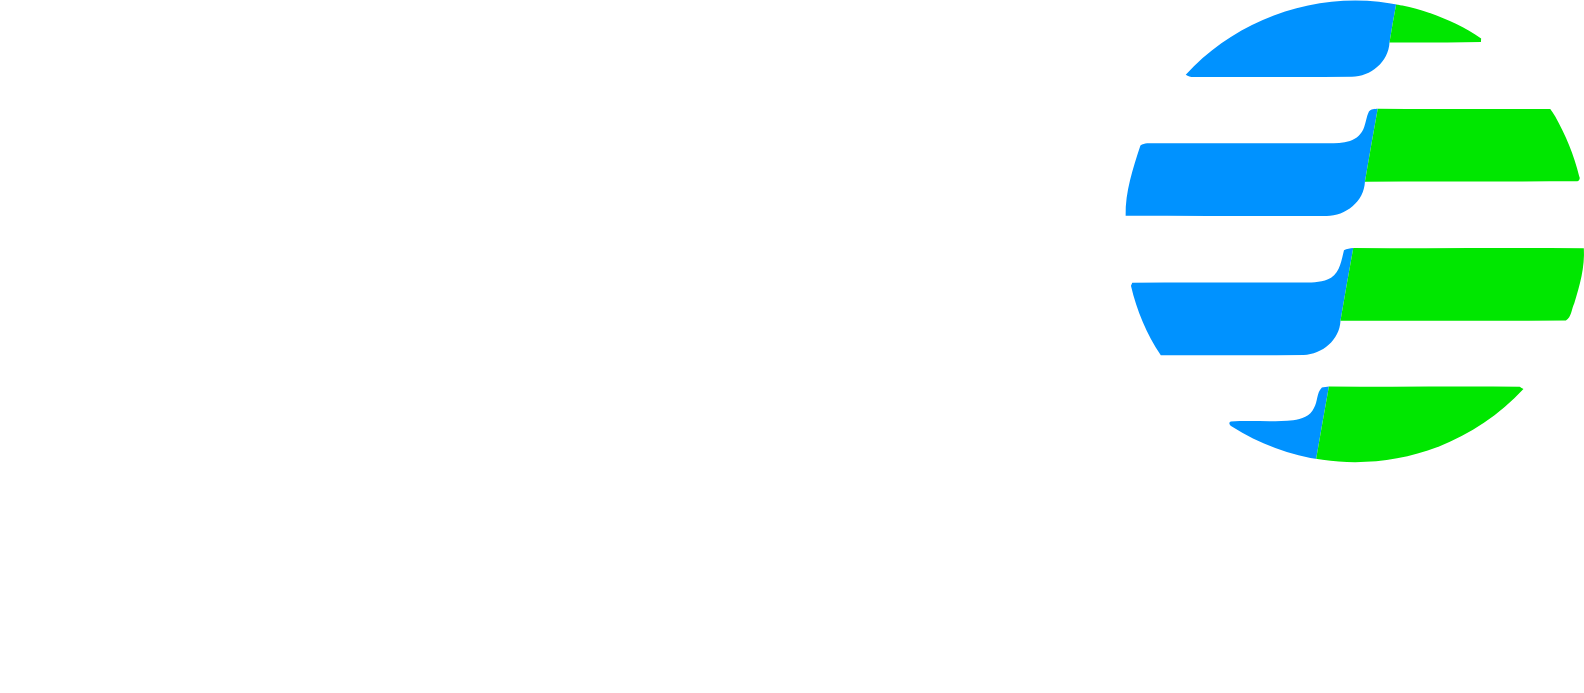 Ultrapar Participacoes logo large for dark backgrounds (transparent PNG)